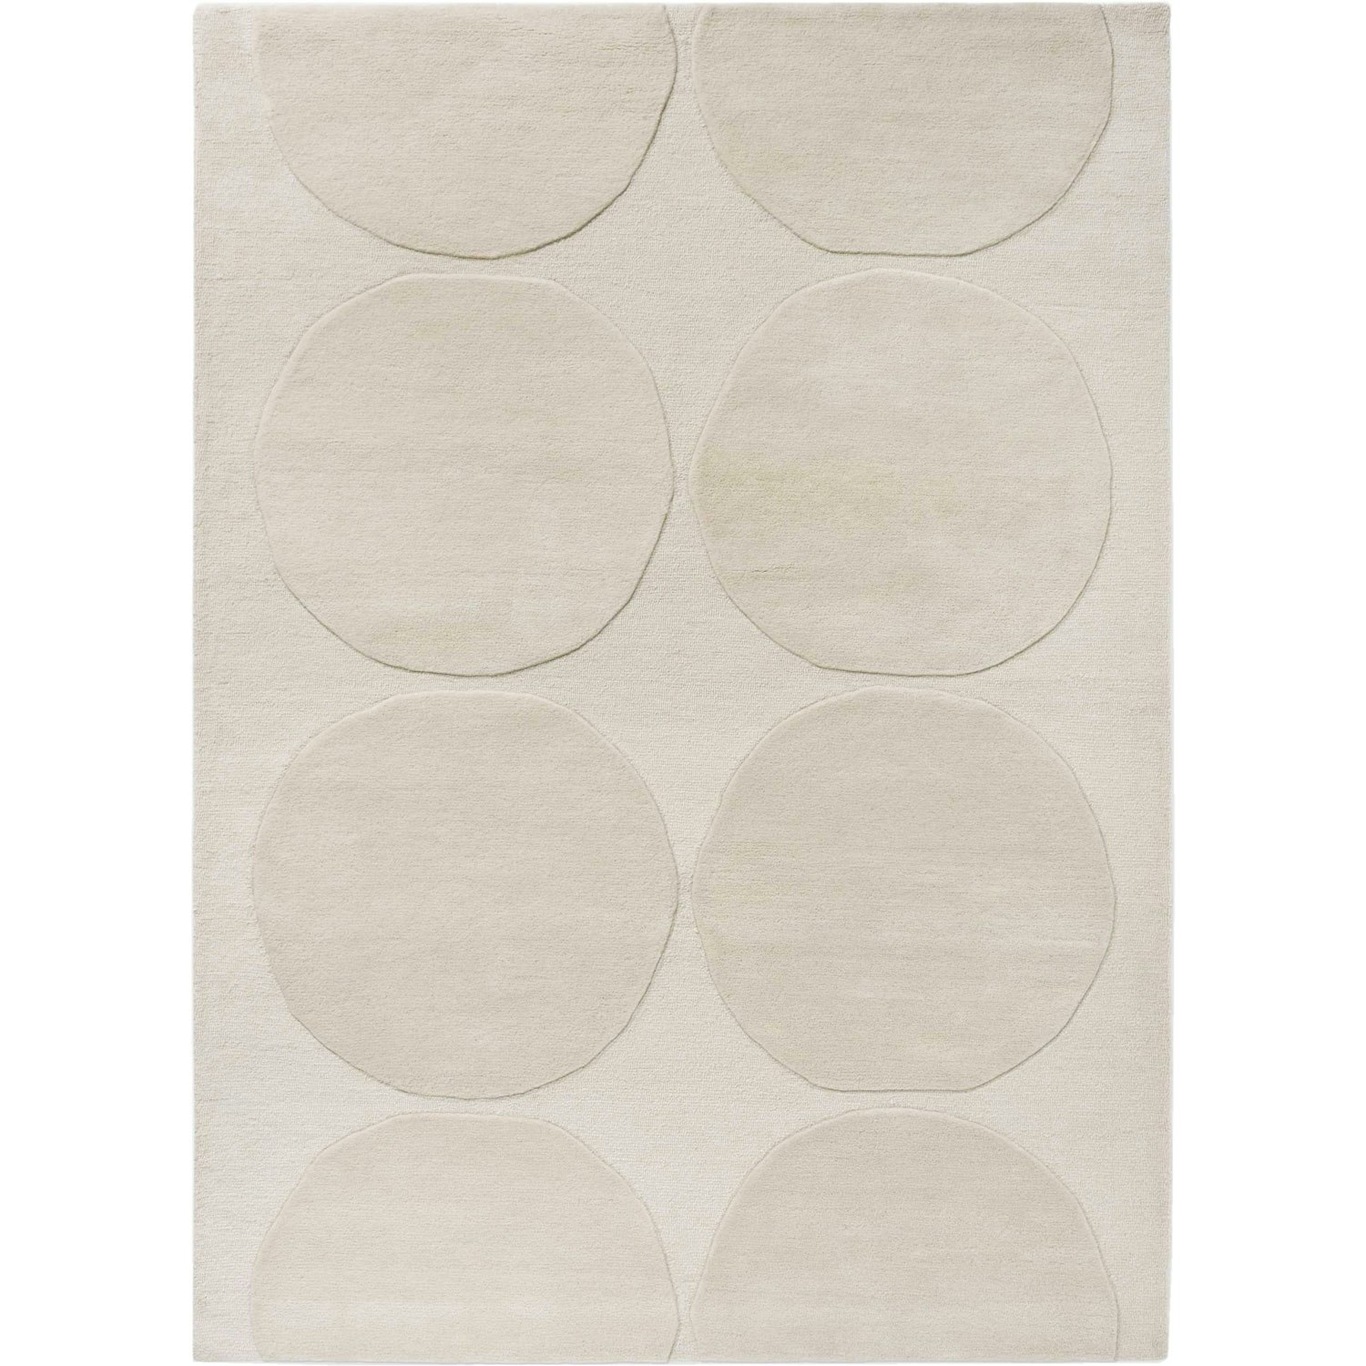 Marimekko Isot Kivet Teppe 200x300 cm, Natural White